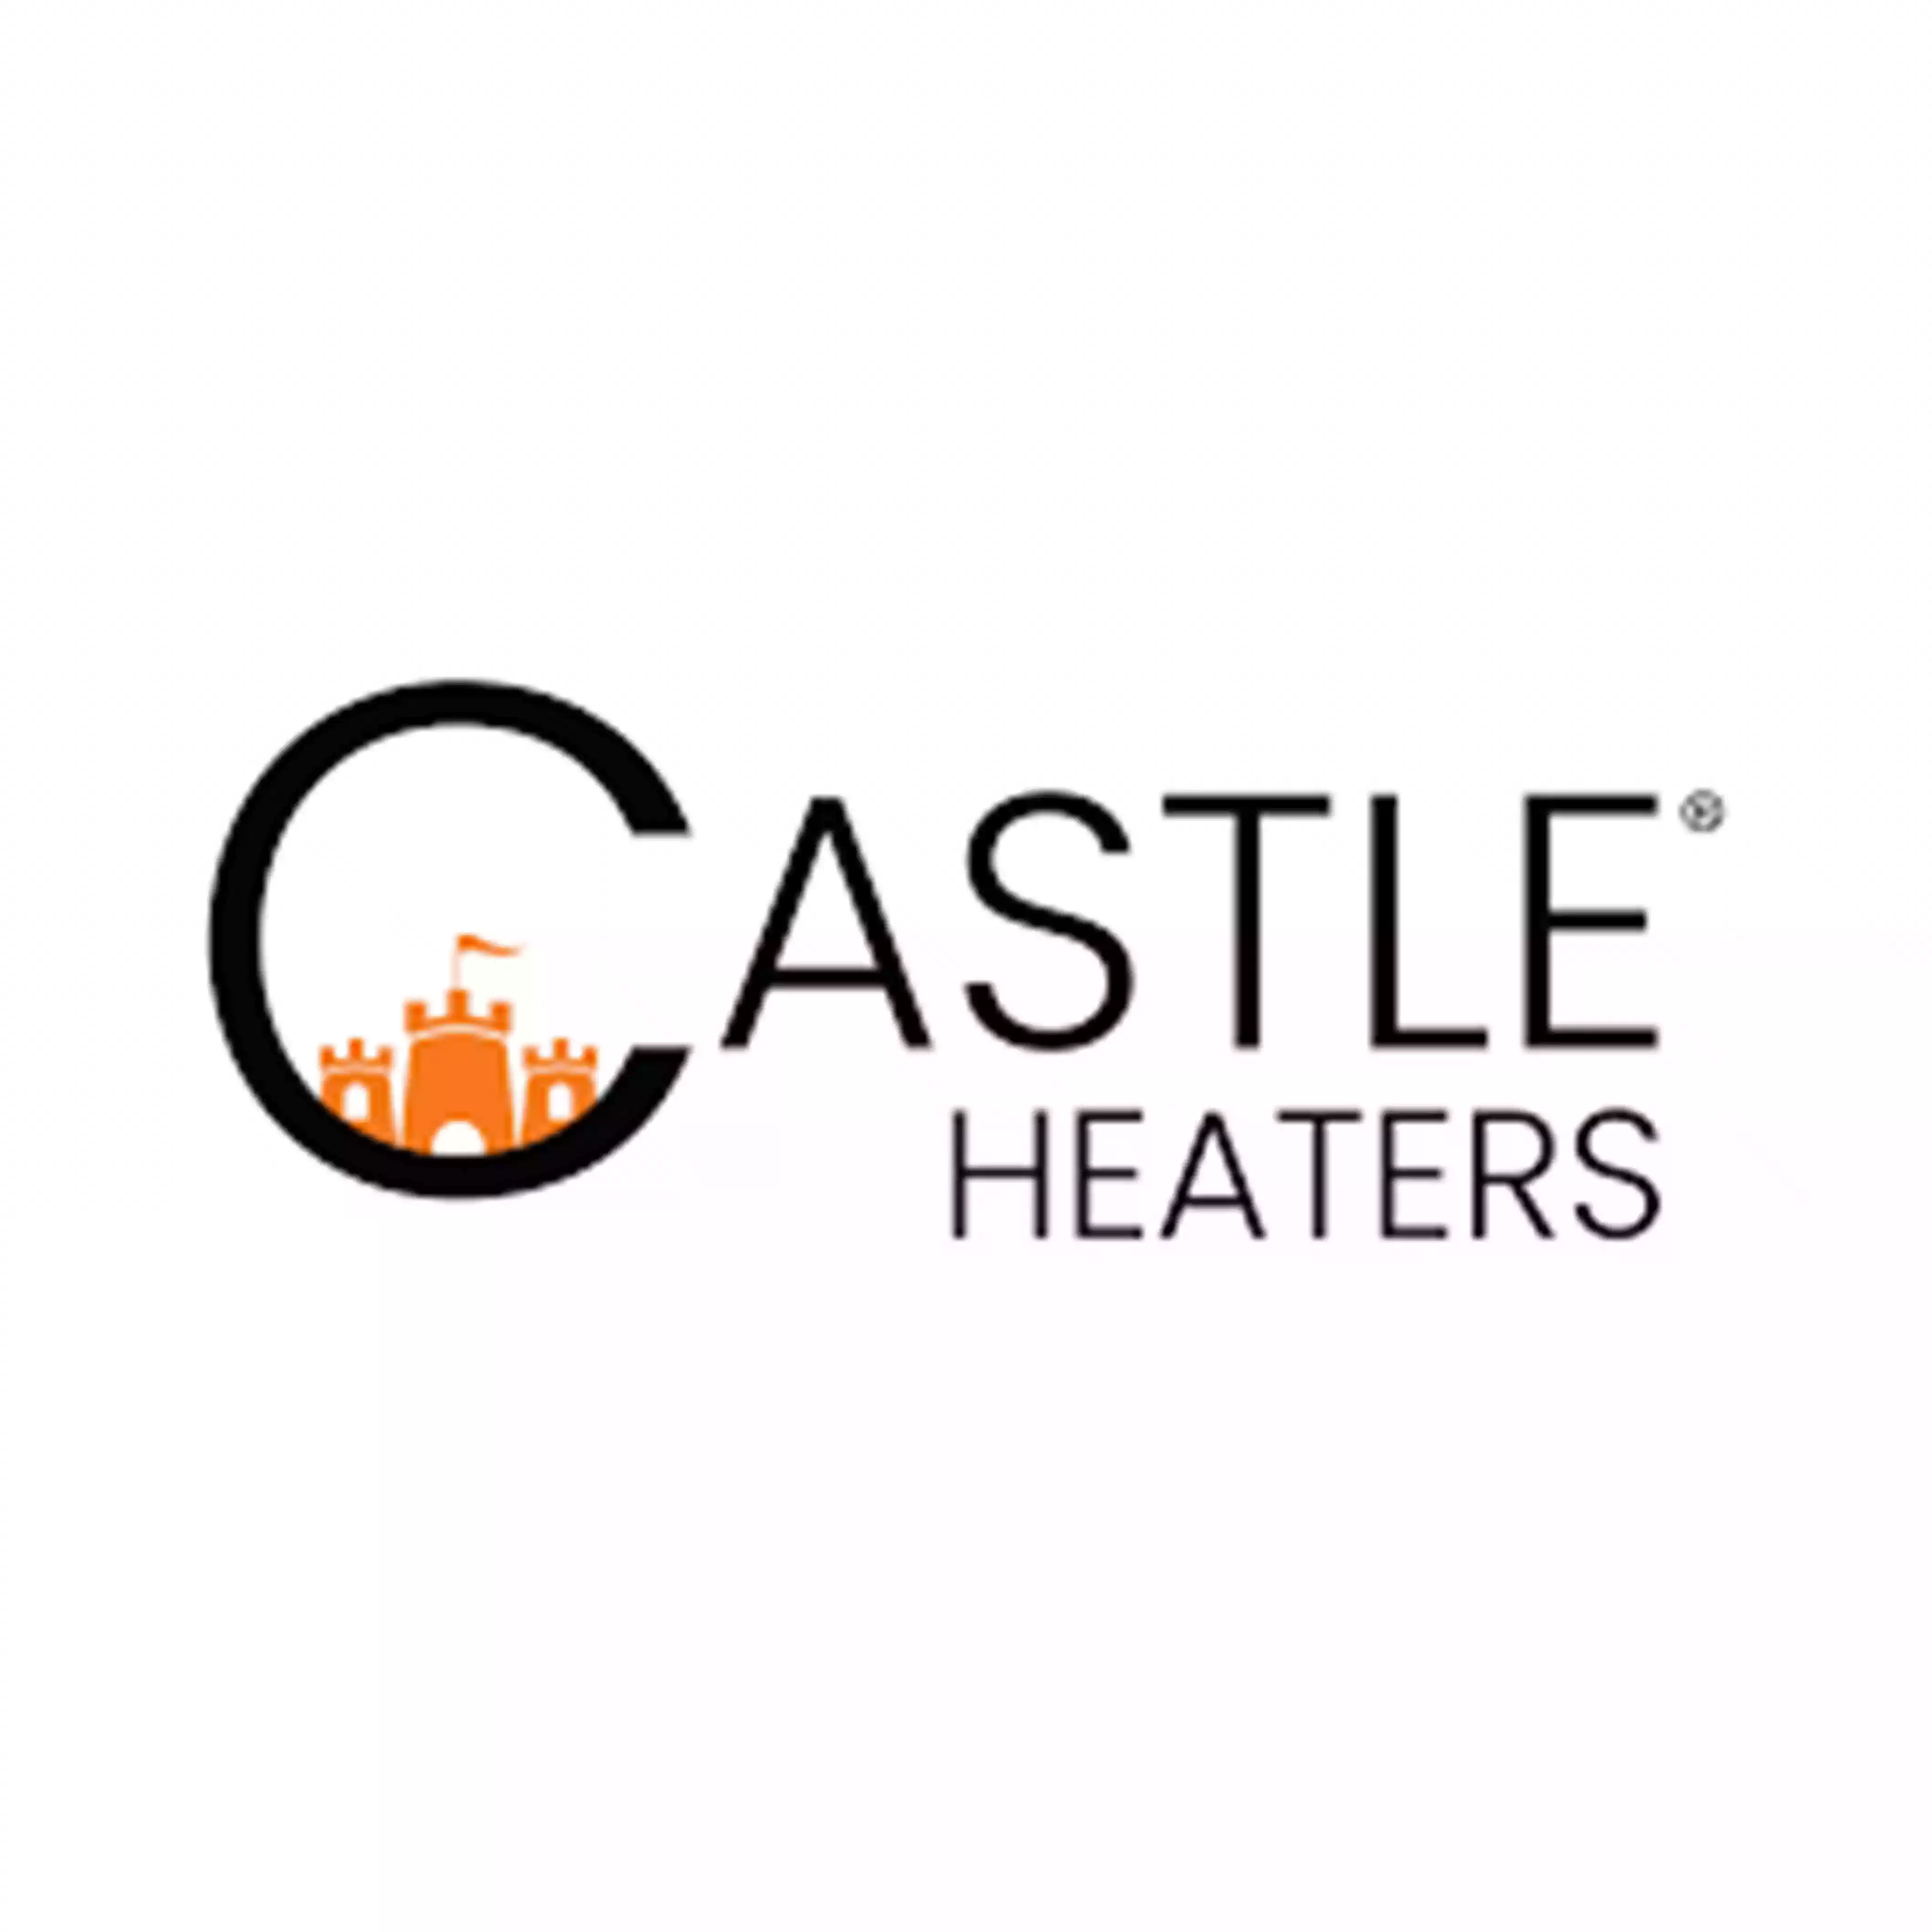 Castle Heaters promo codes